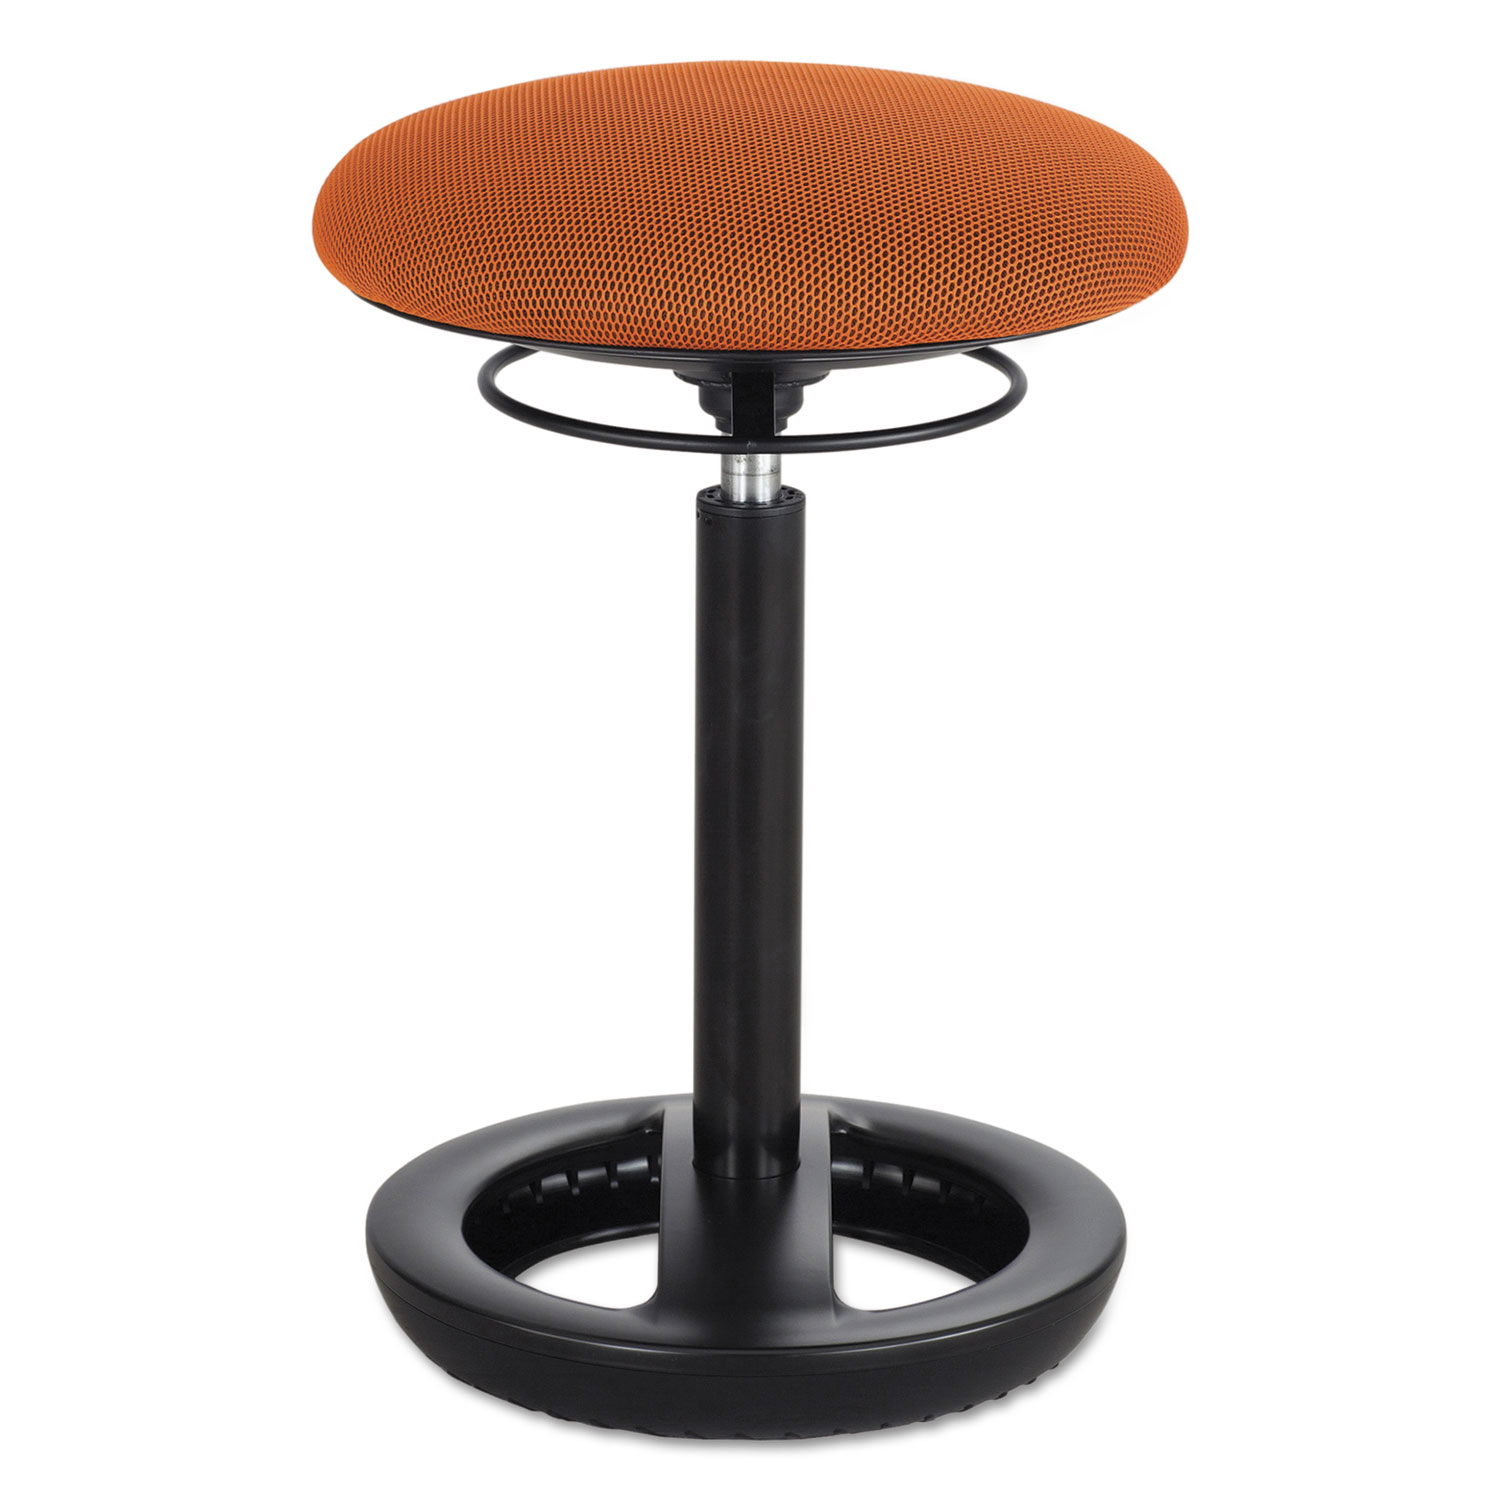 Twixt Desk Height Ergonomic Stool, 22 1/2 High, Orange Fabric